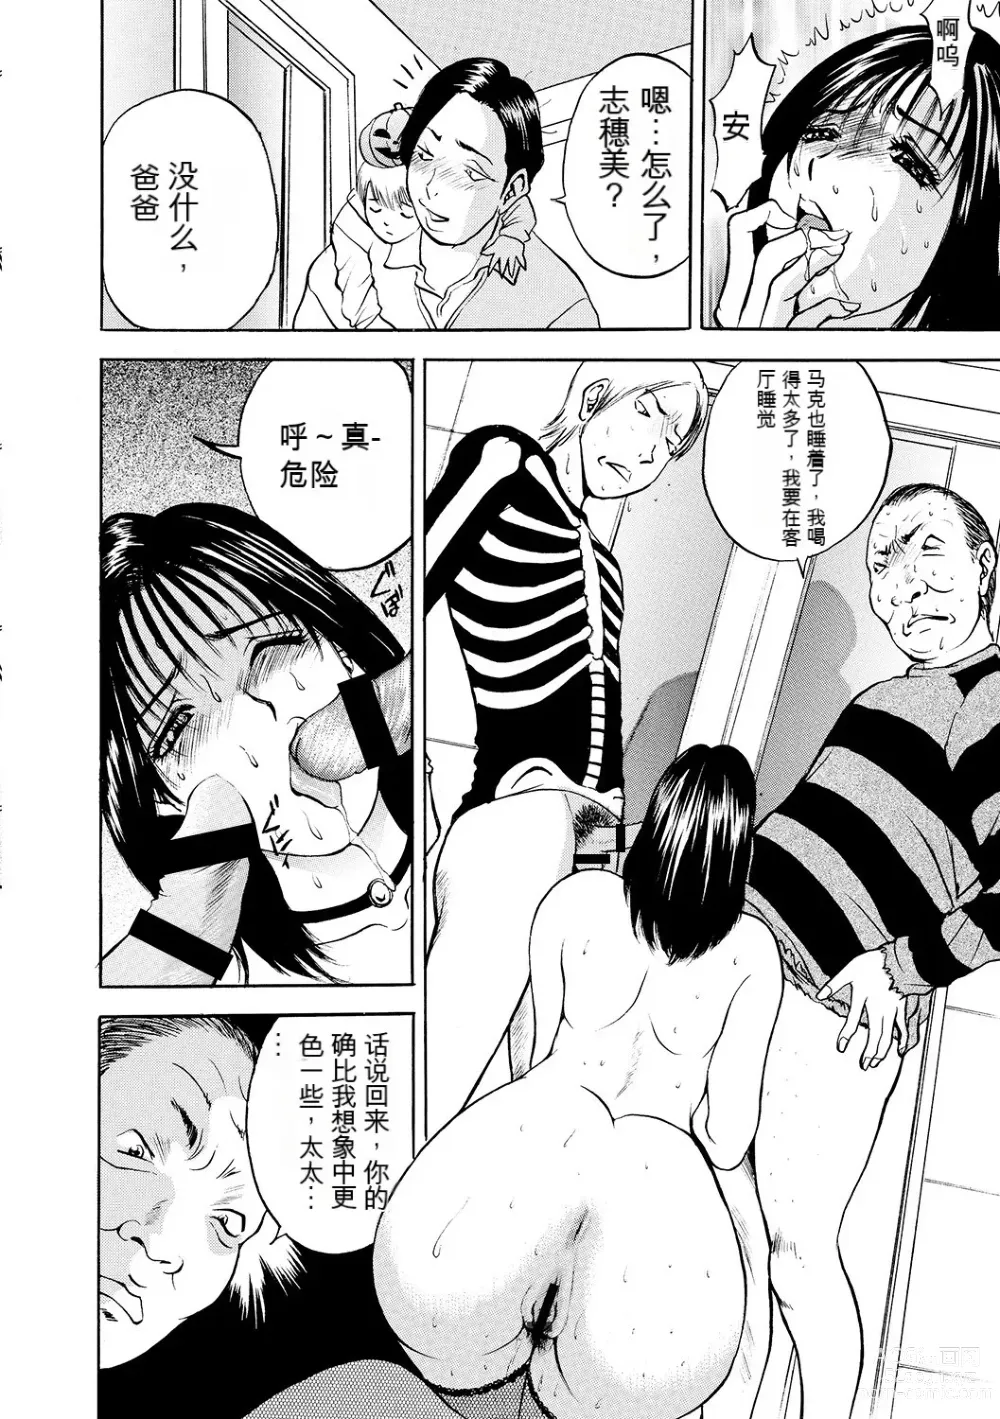 Page 204 of manga 母淫いぢり Boin Ijiri